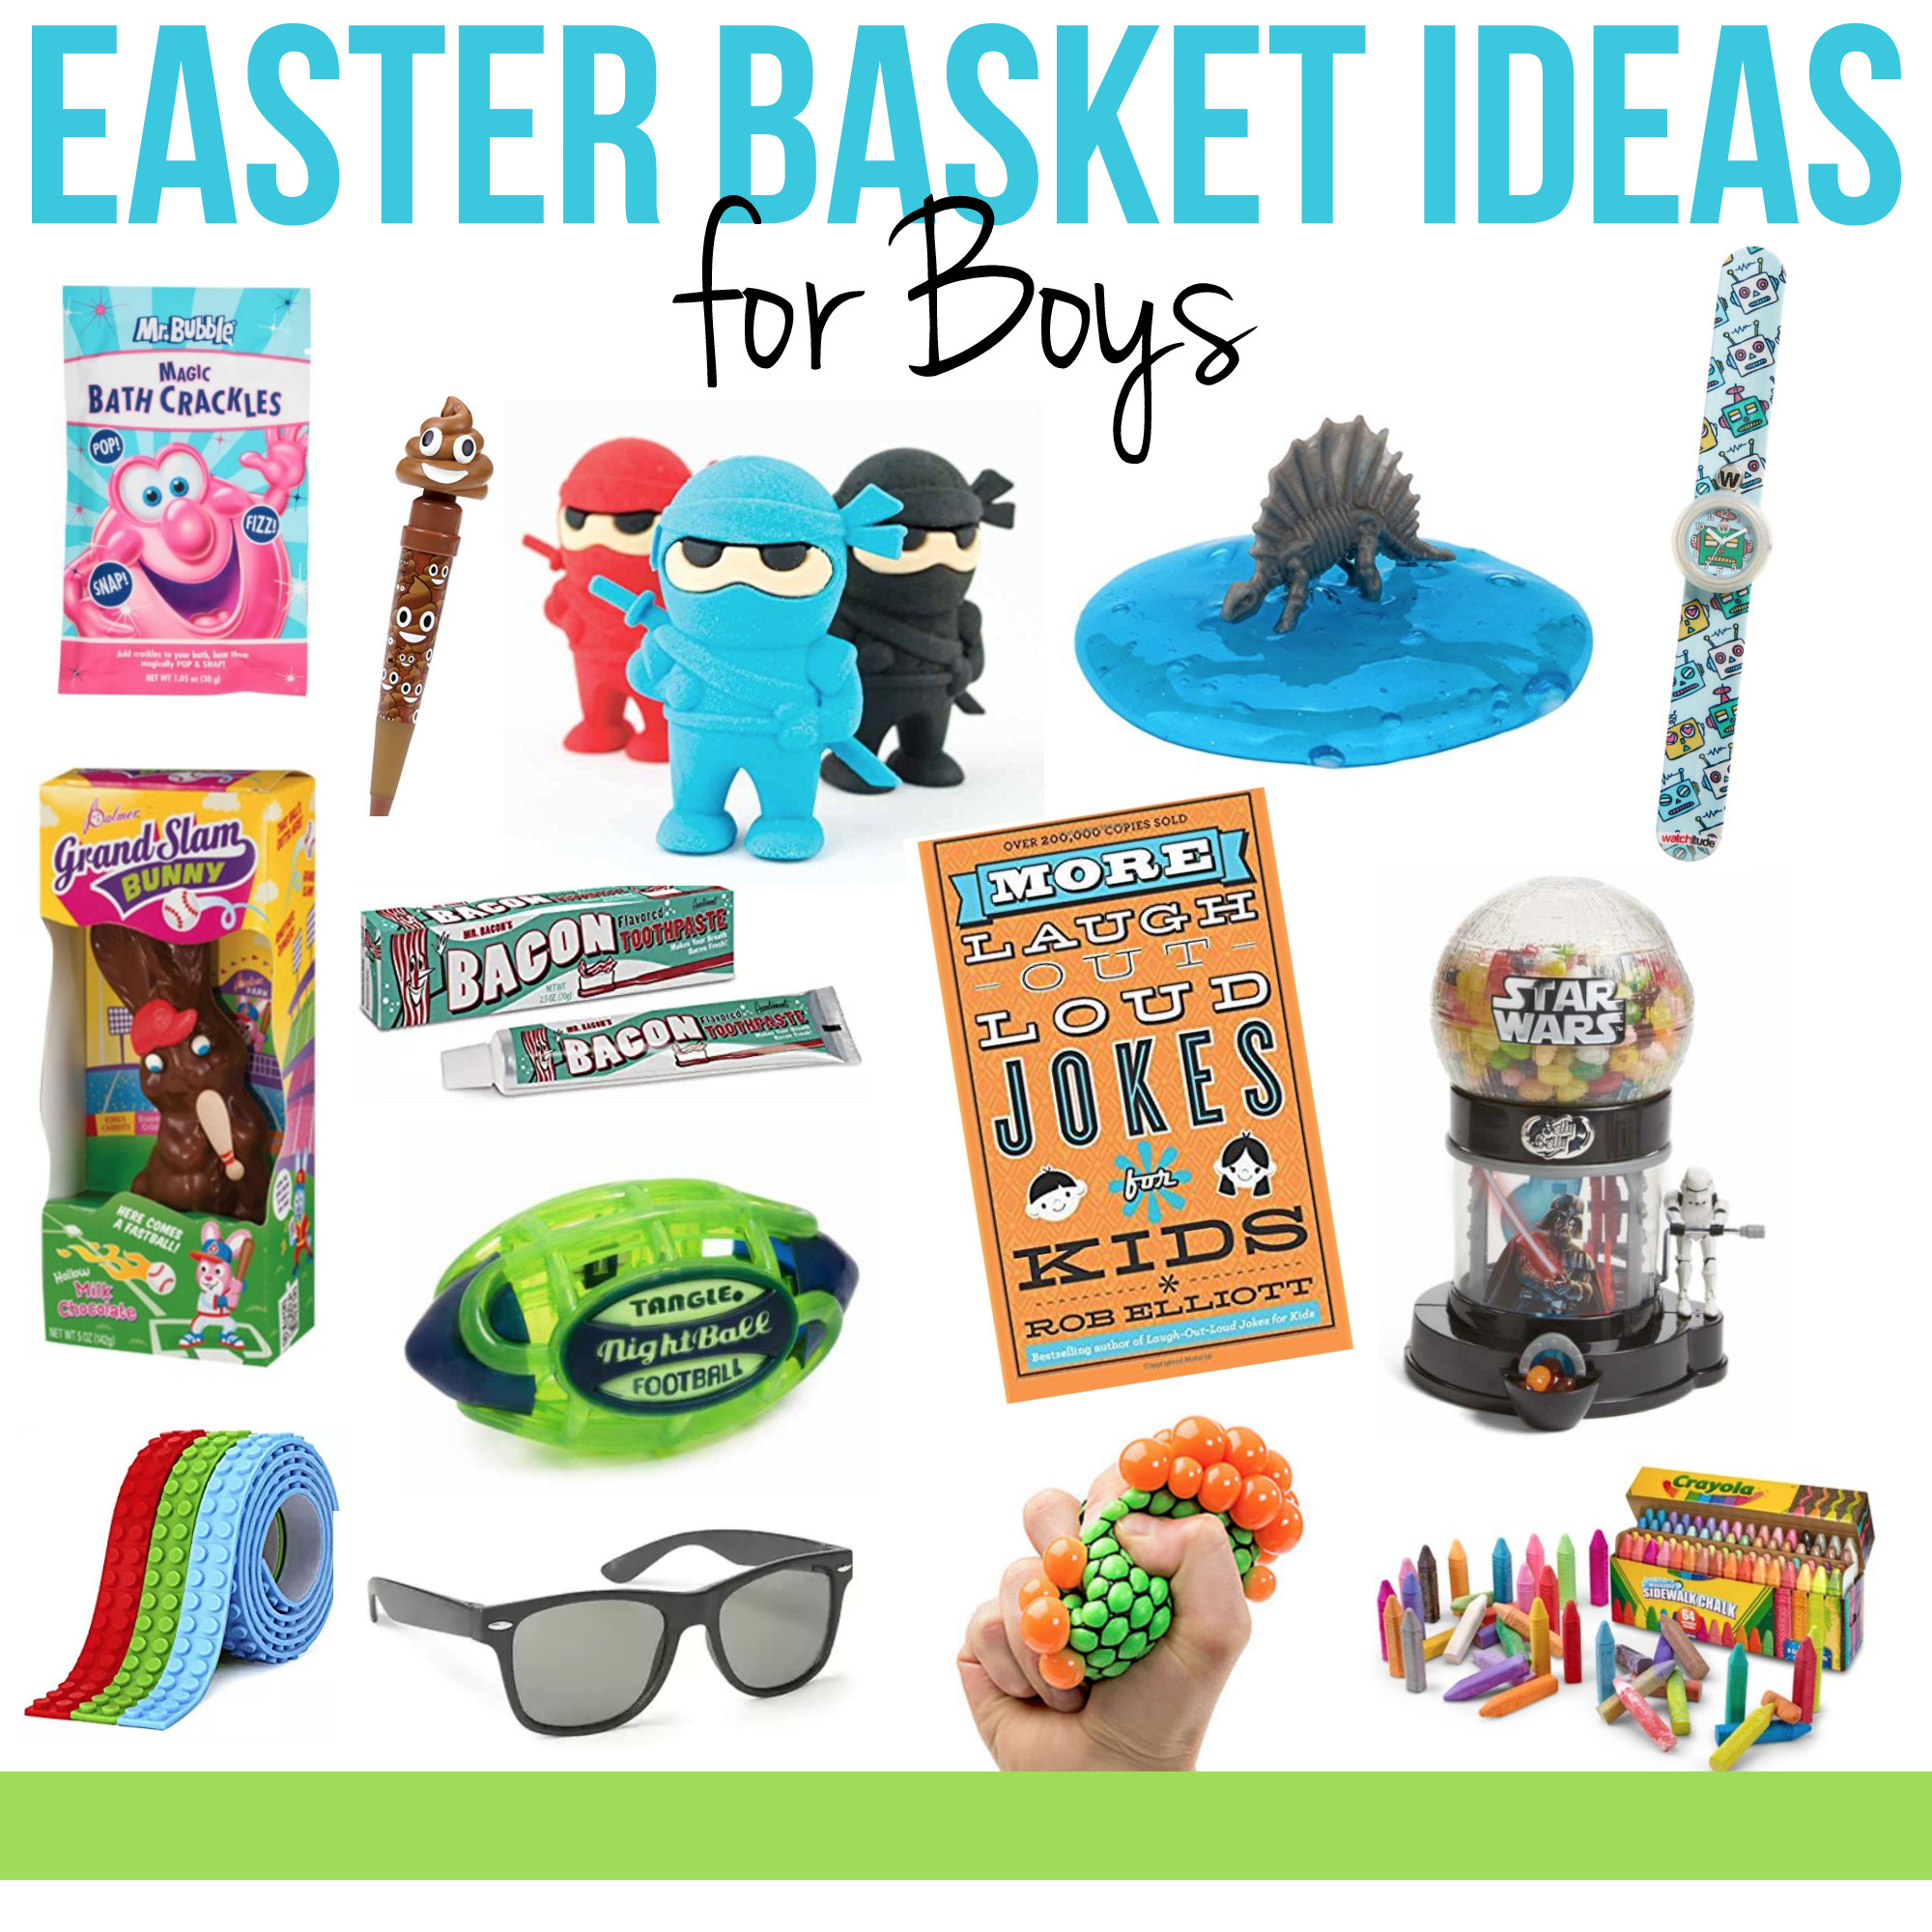 Boys Easter Basket Ideas
 Easter Basket Ideas for Boys My Frugal Adventures